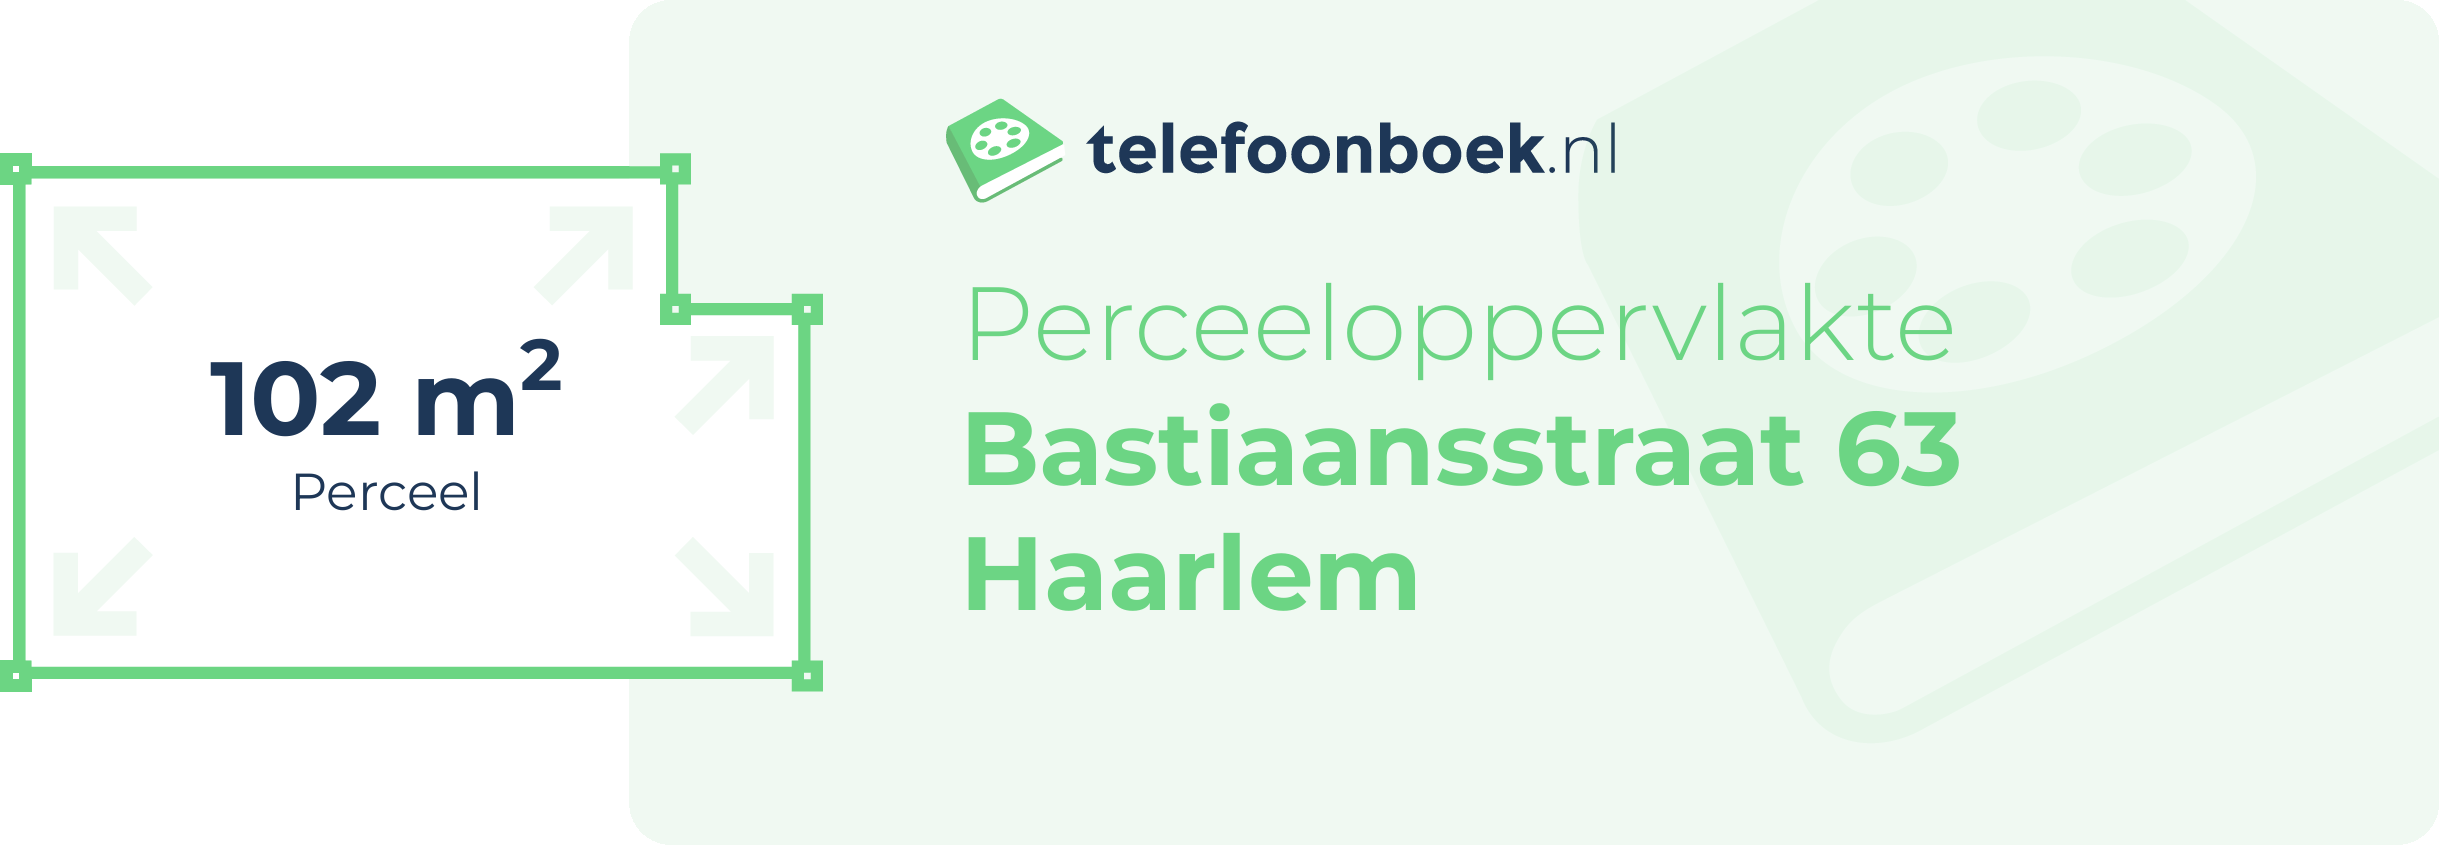 Perceeloppervlakte Bastiaansstraat 63 Haarlem